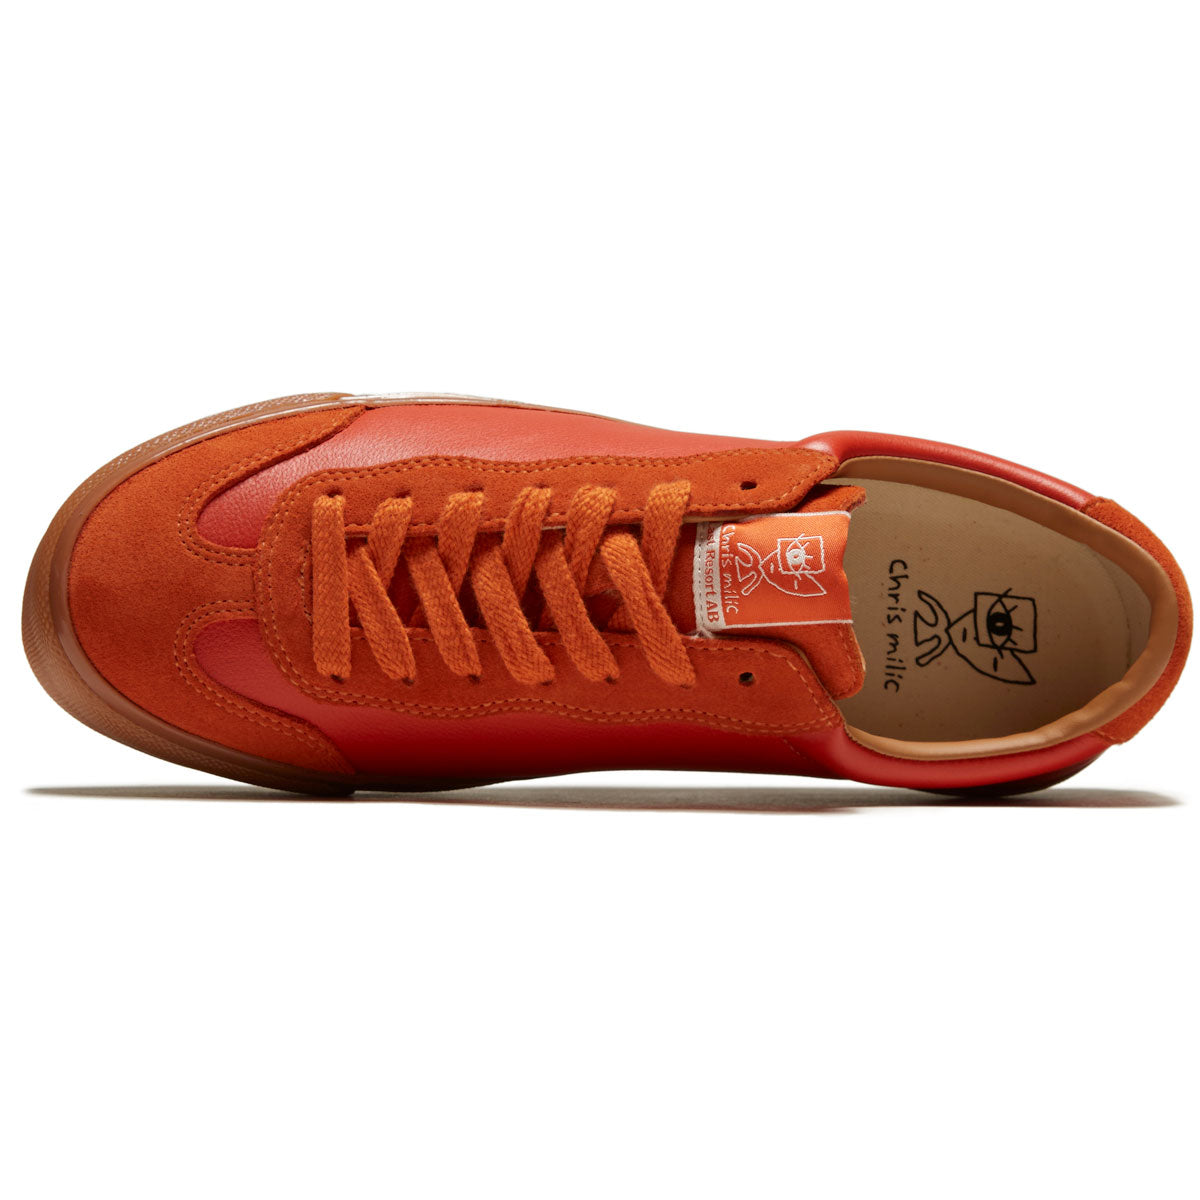 Last Resort AB VM004 Milic Leather Suede Low Shoes - Duo Orange/Gum image 3